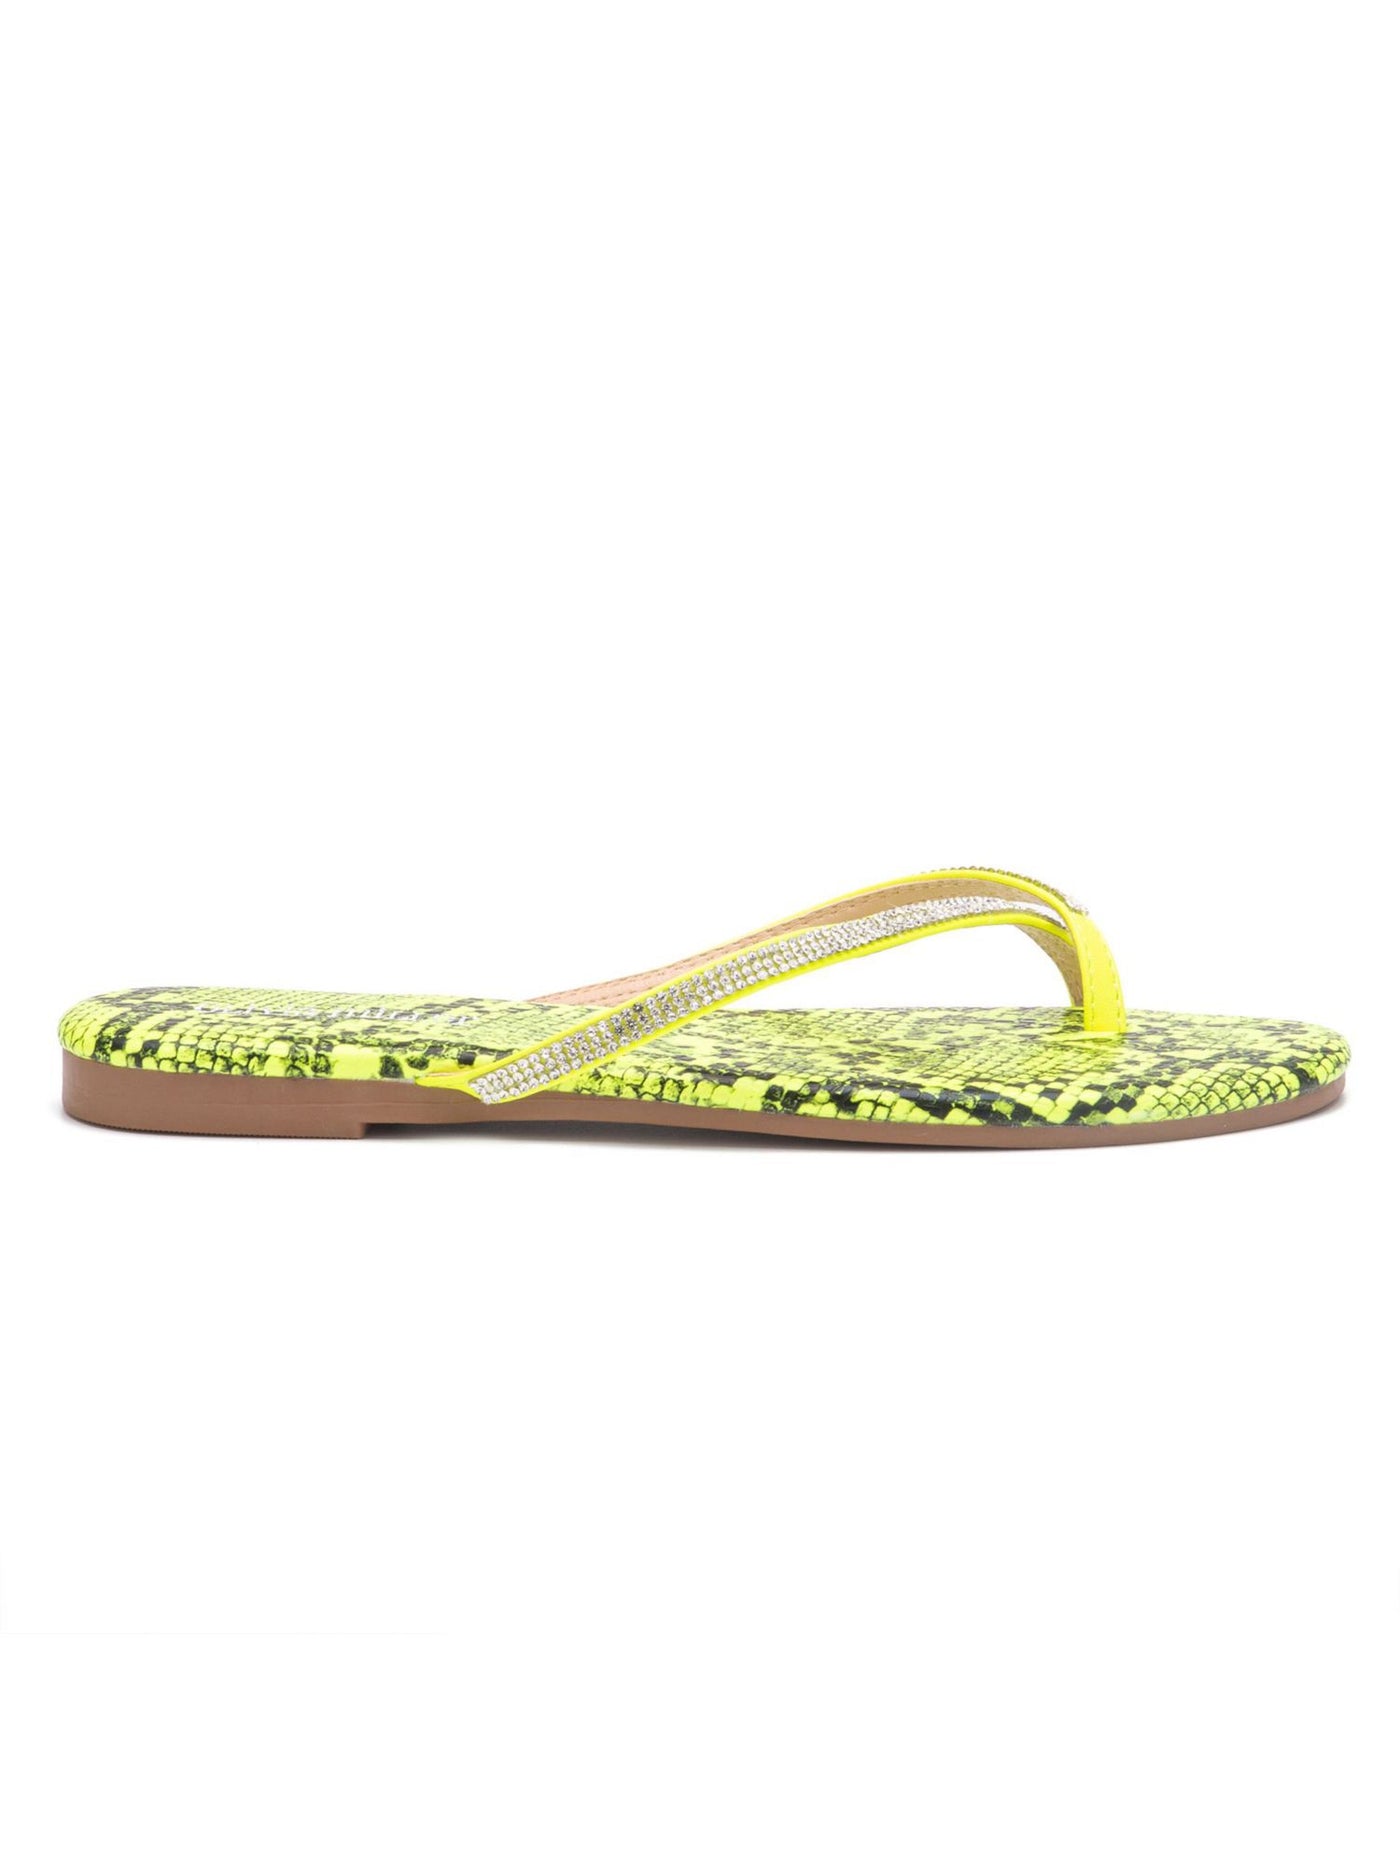 OLIVIA MILLER Womens Yellow Snake Rhinestone Comfort Legendary Round Toe Slip On Sandals Shoes 7